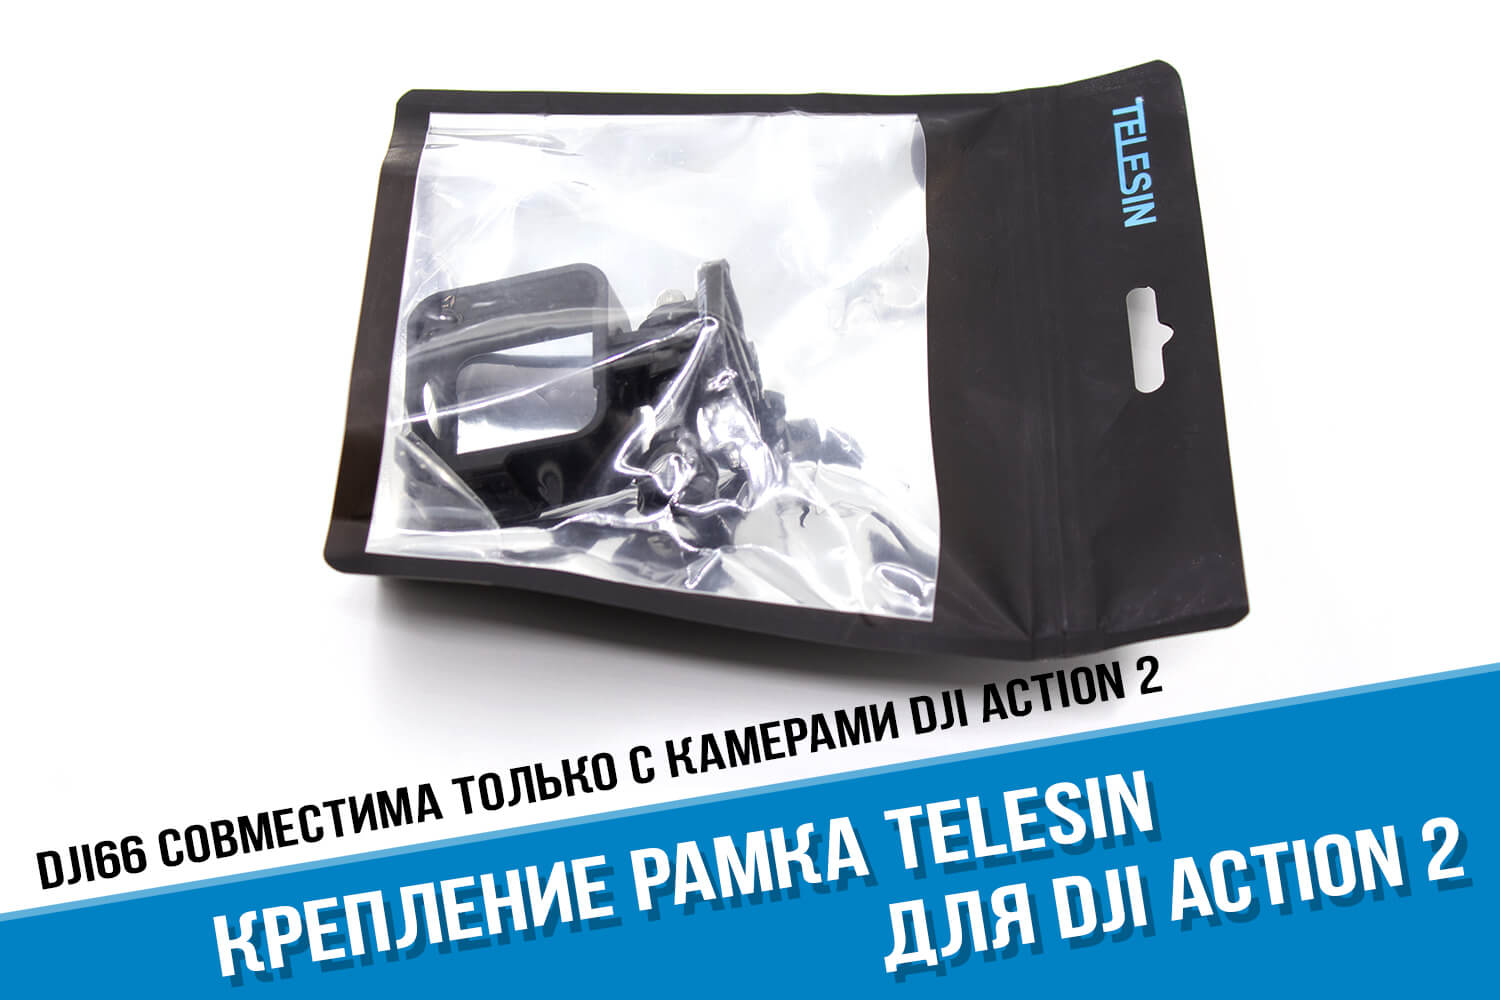 Рамка камеры DJI Action 2 Power Combo фирмы Telesin